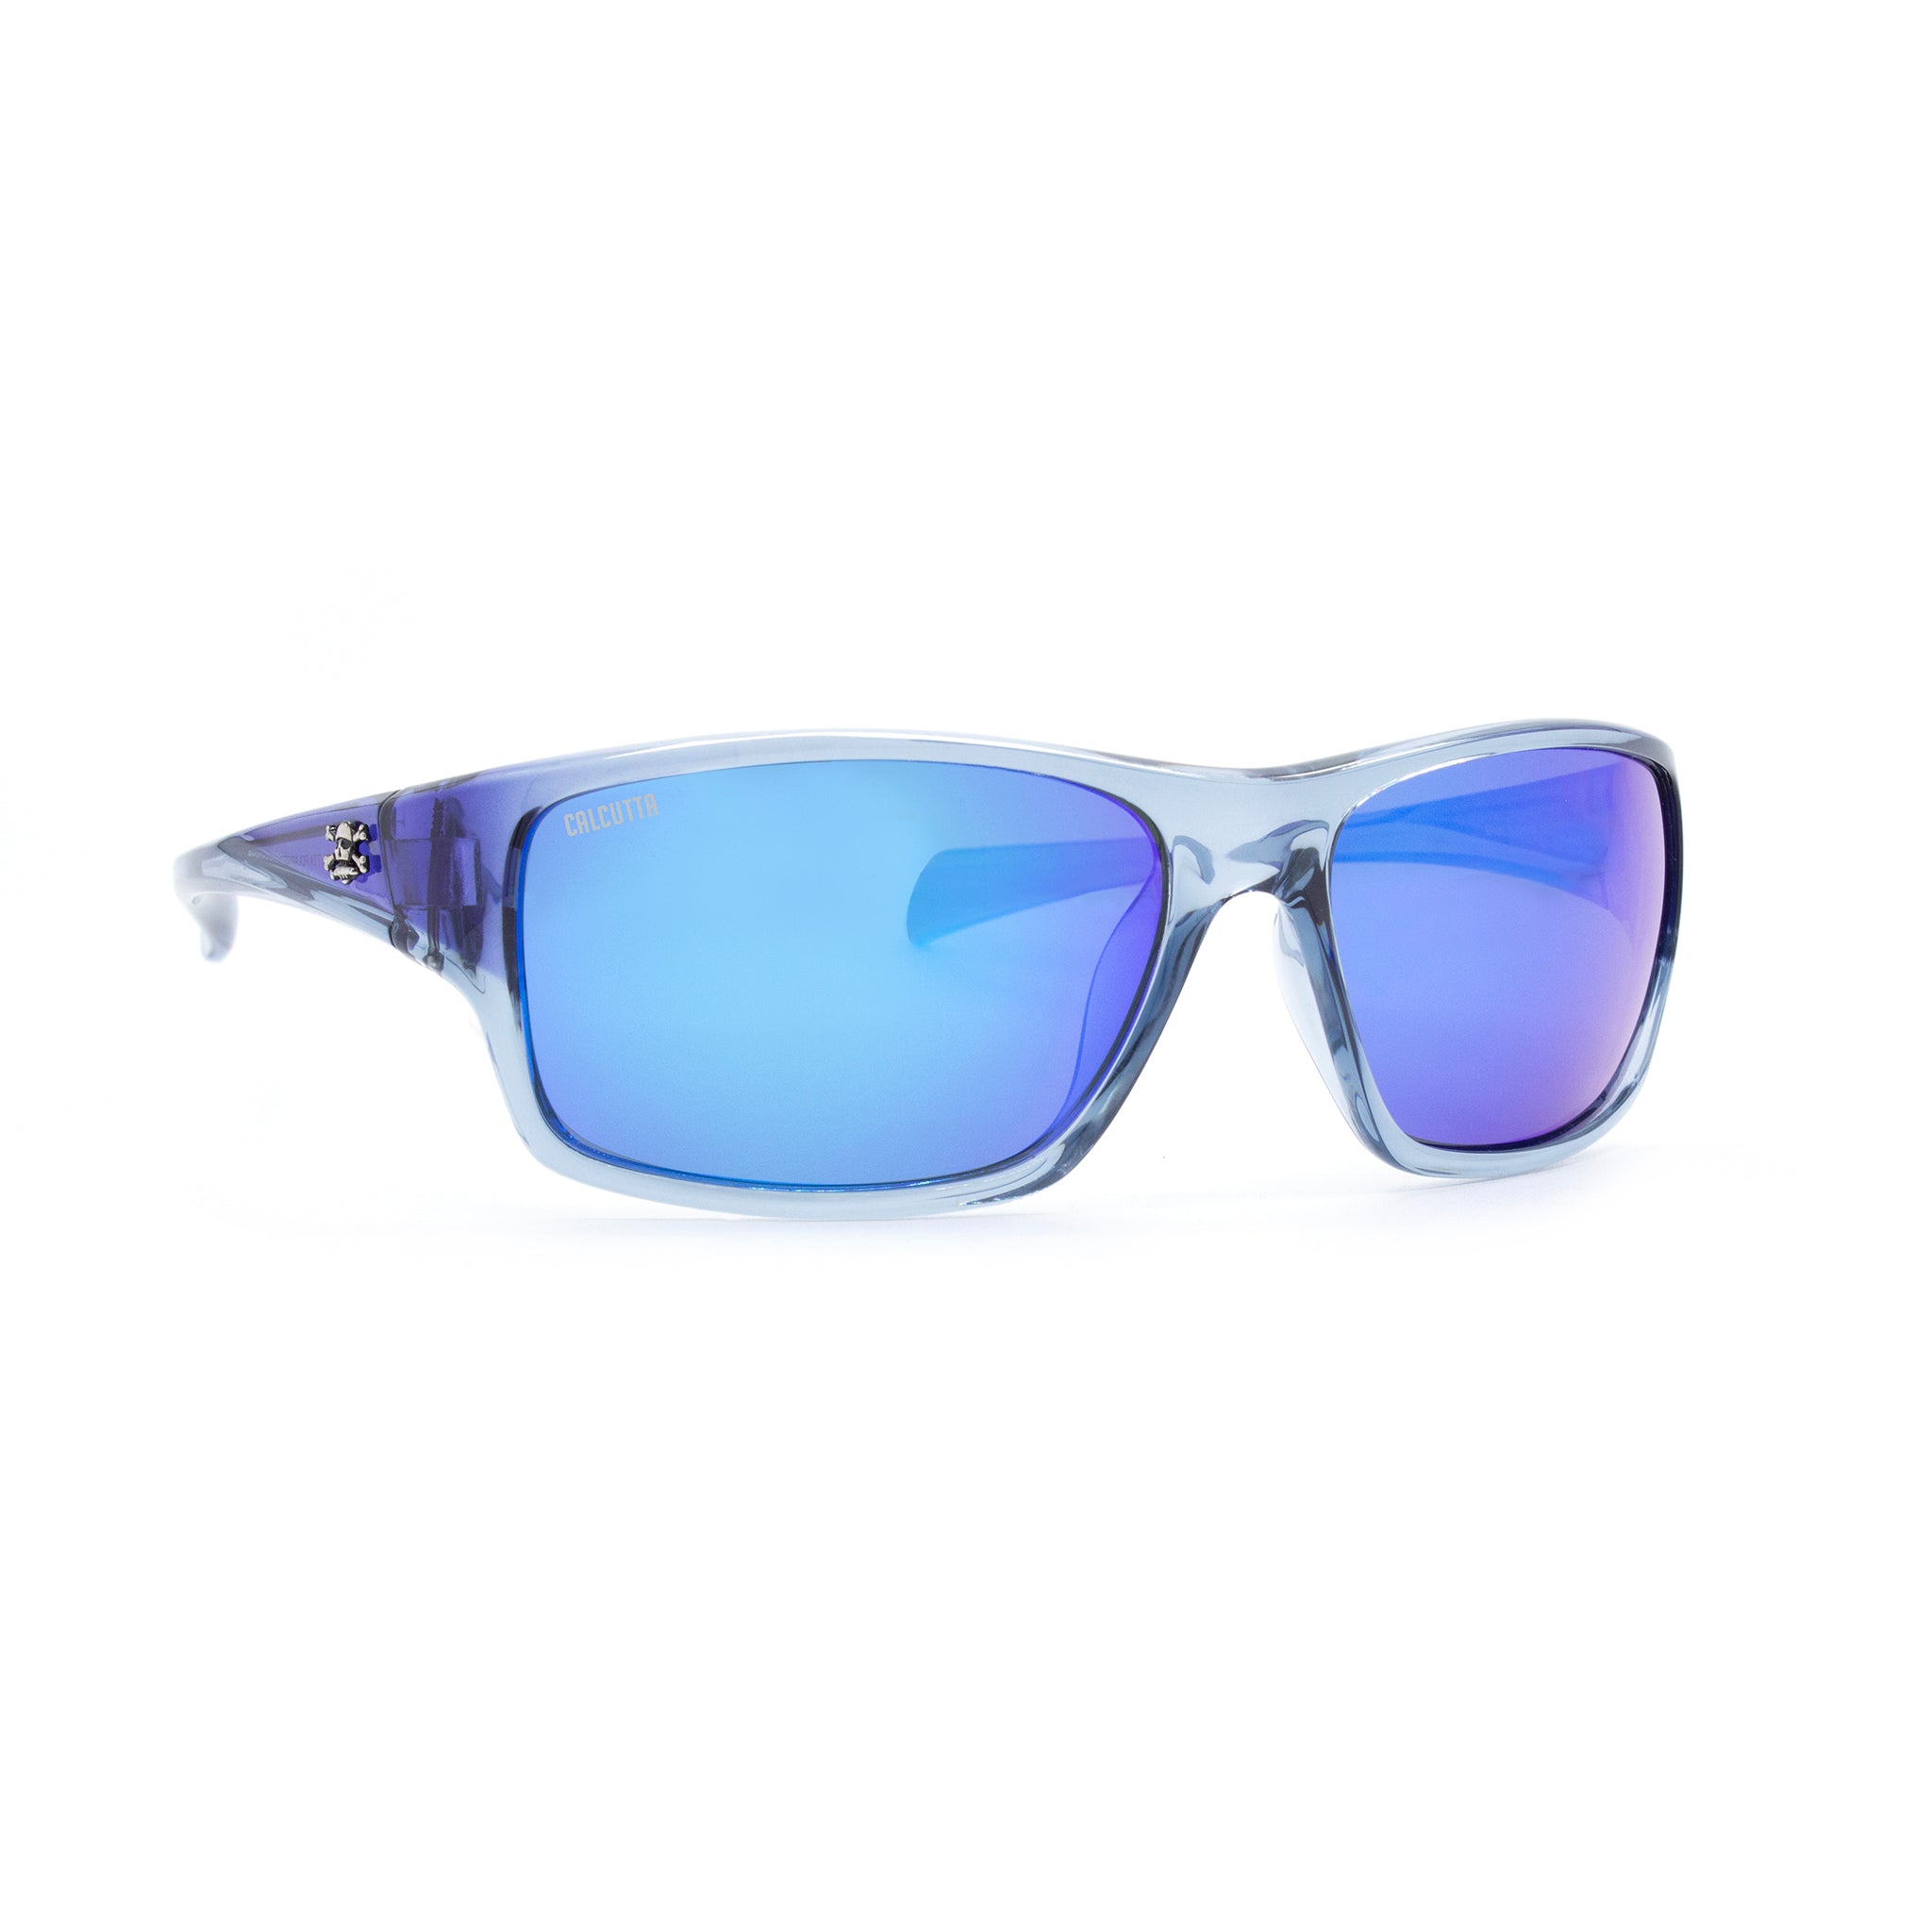 Calcutta Chesapeake sunglasses blue mirror